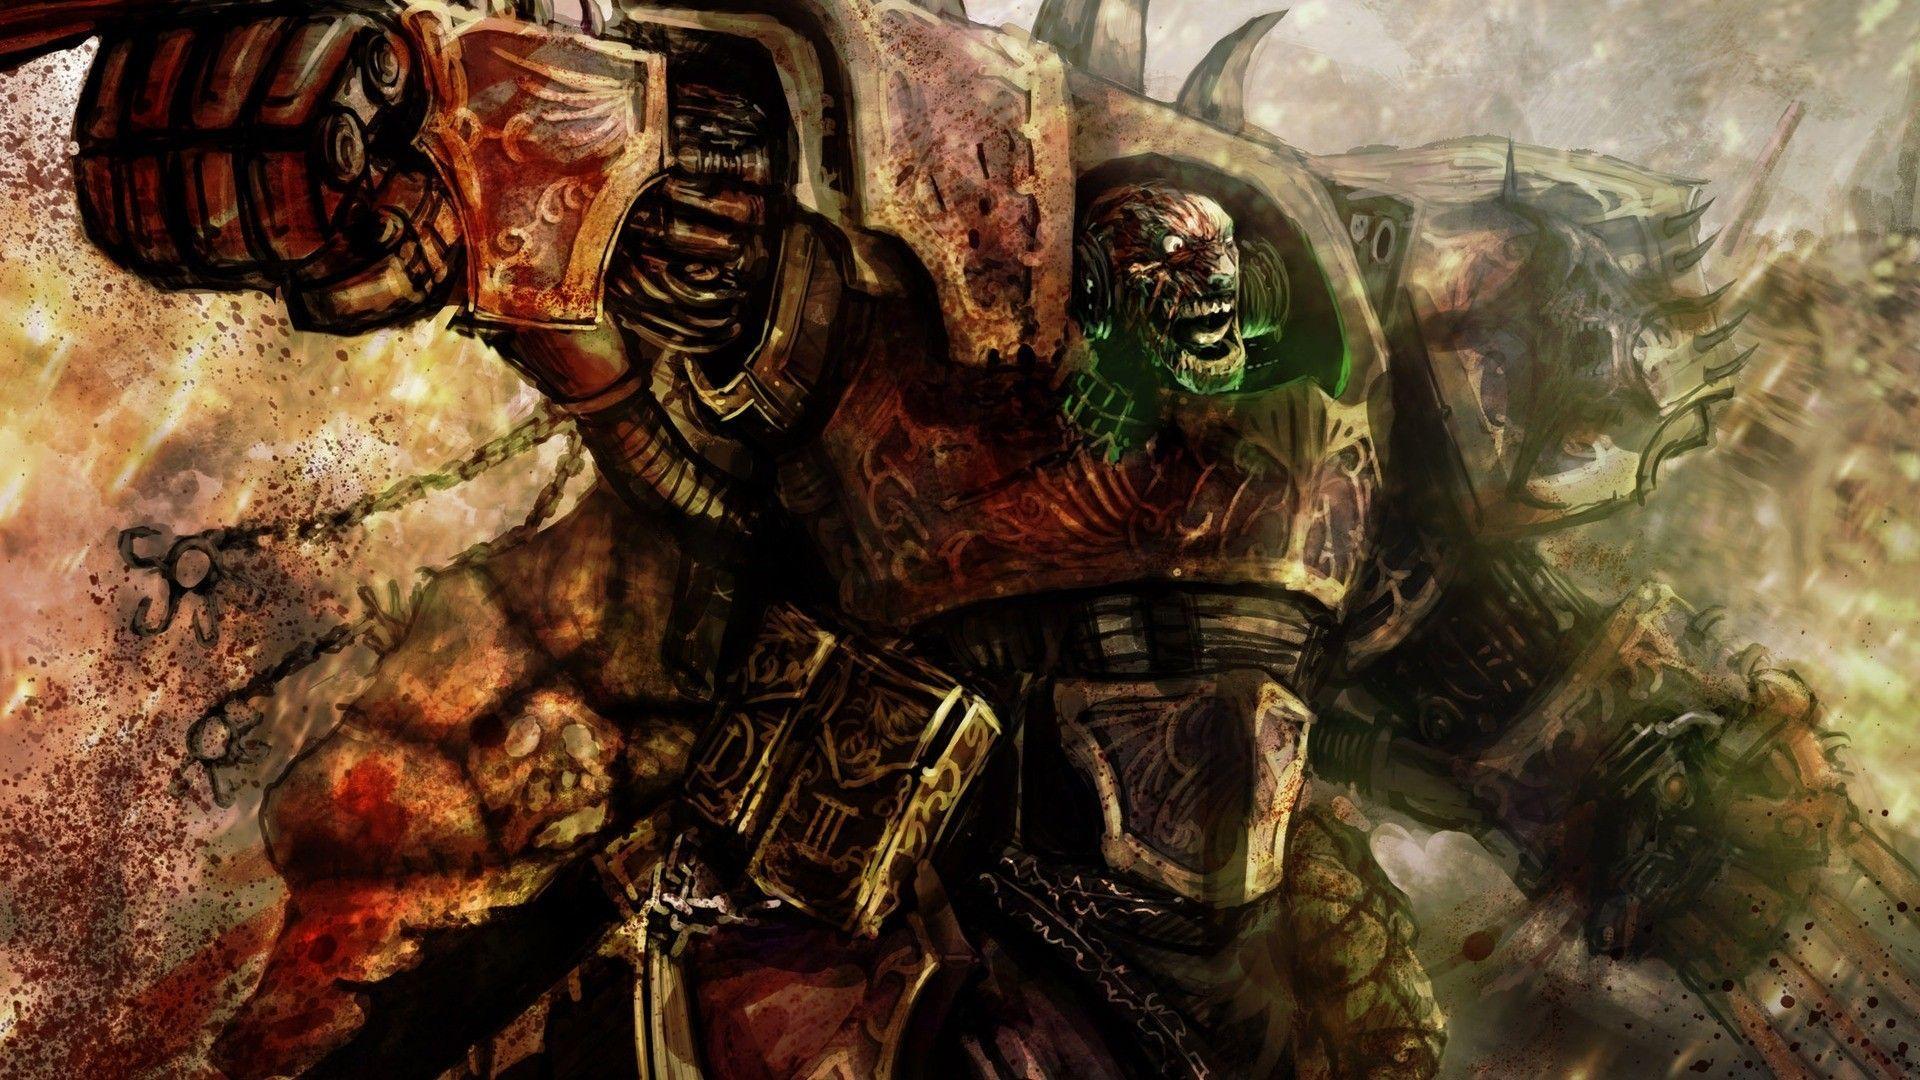 Výsledek obrázku pro warhammer 40k chaos wallpaper. Warhammer 40k